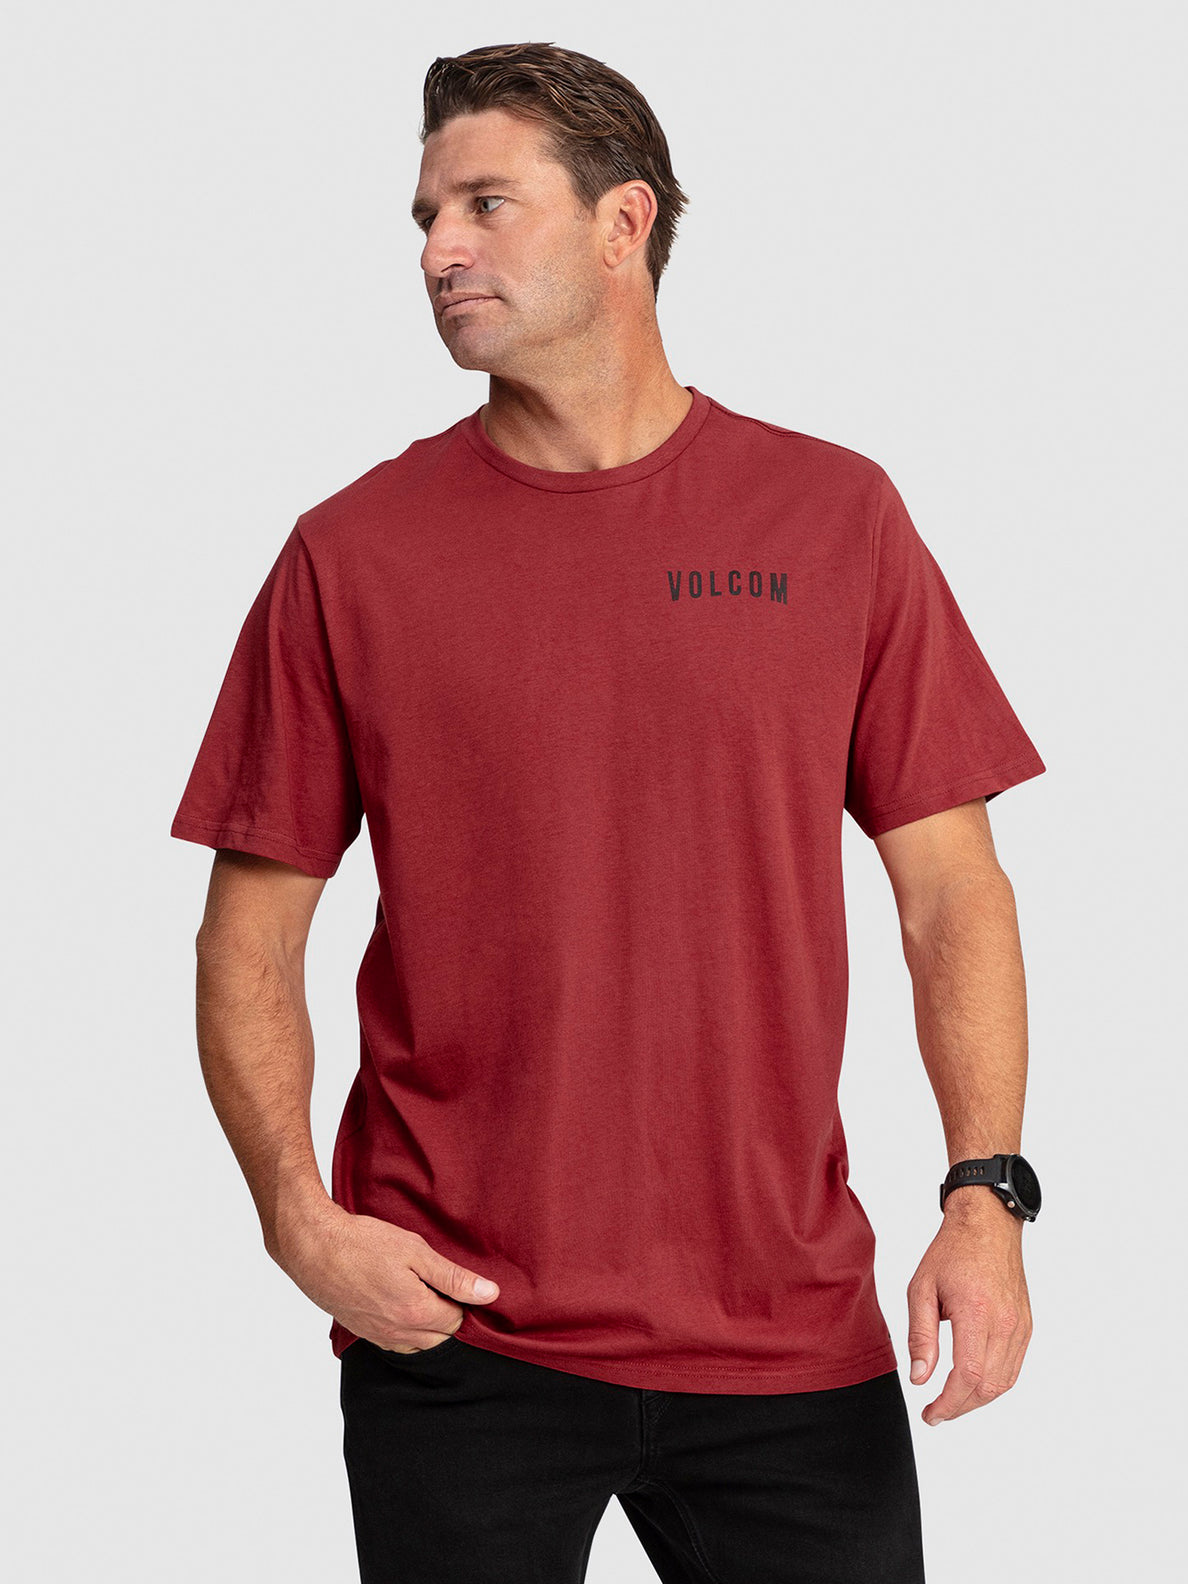 Garage Club Short Sleeve T-Shirt - Deep Red (A5002307_DRE) [F]